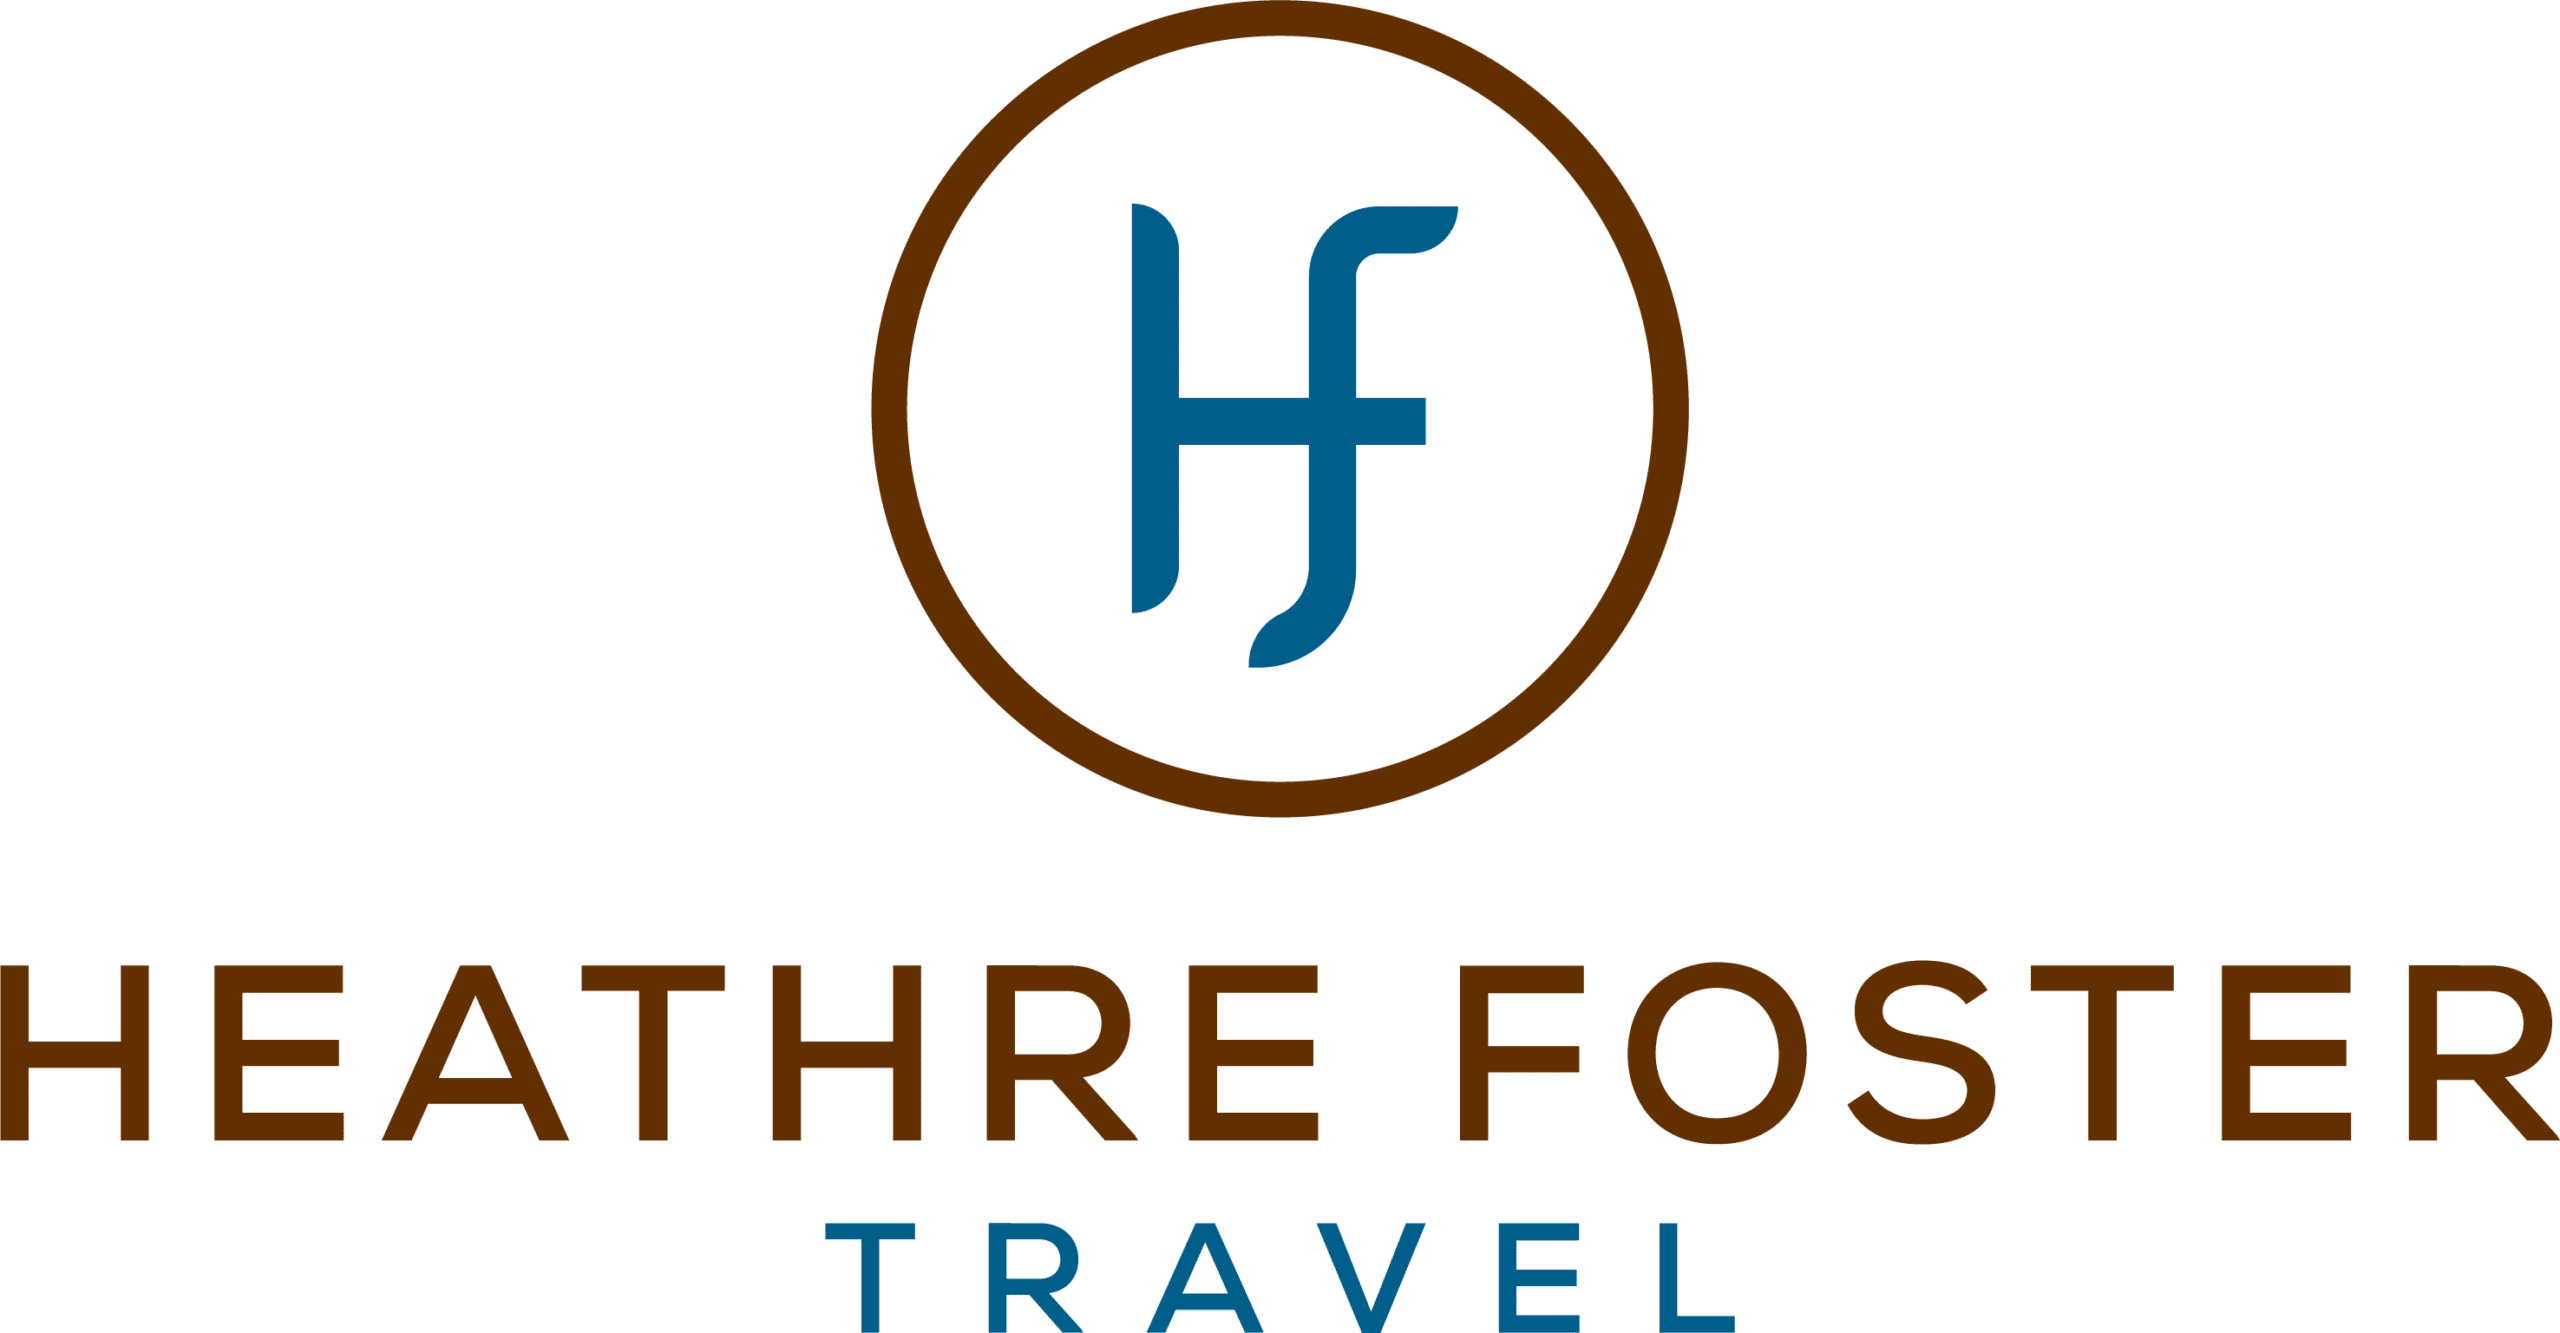 Heather foster travel logo.